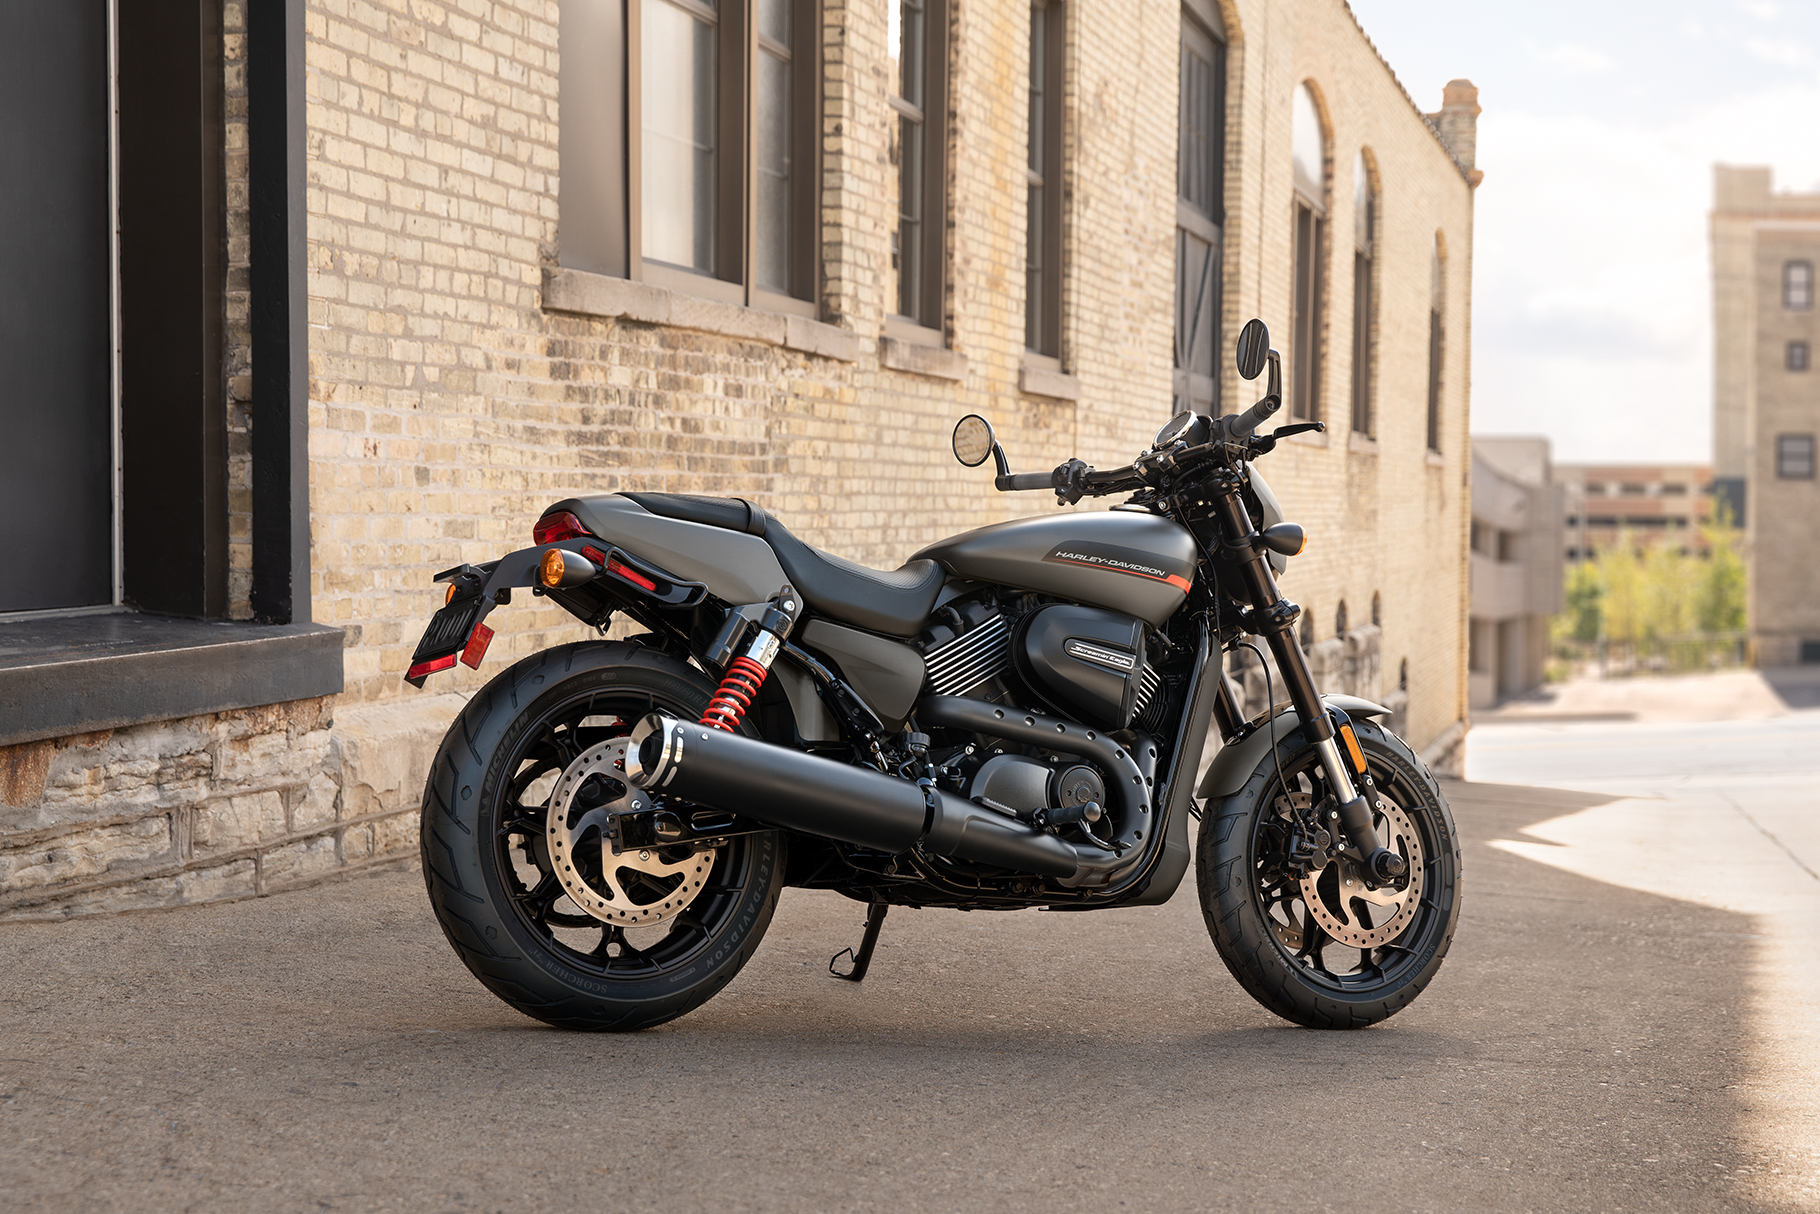  2019  Street Rod Motorcycle Harley  Davidson  USA